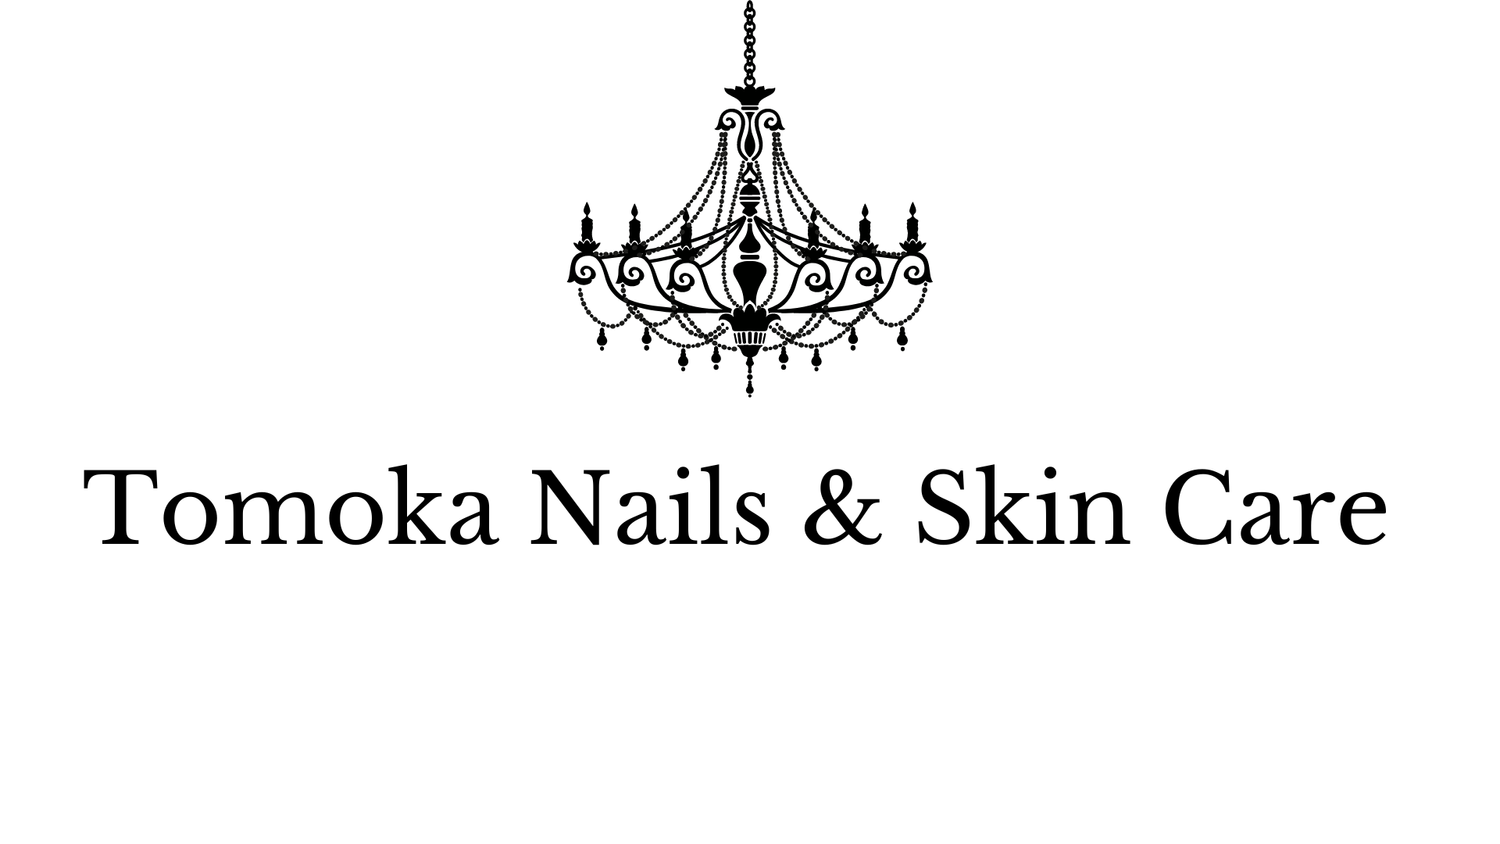 Tomoka Nails & Skin Care